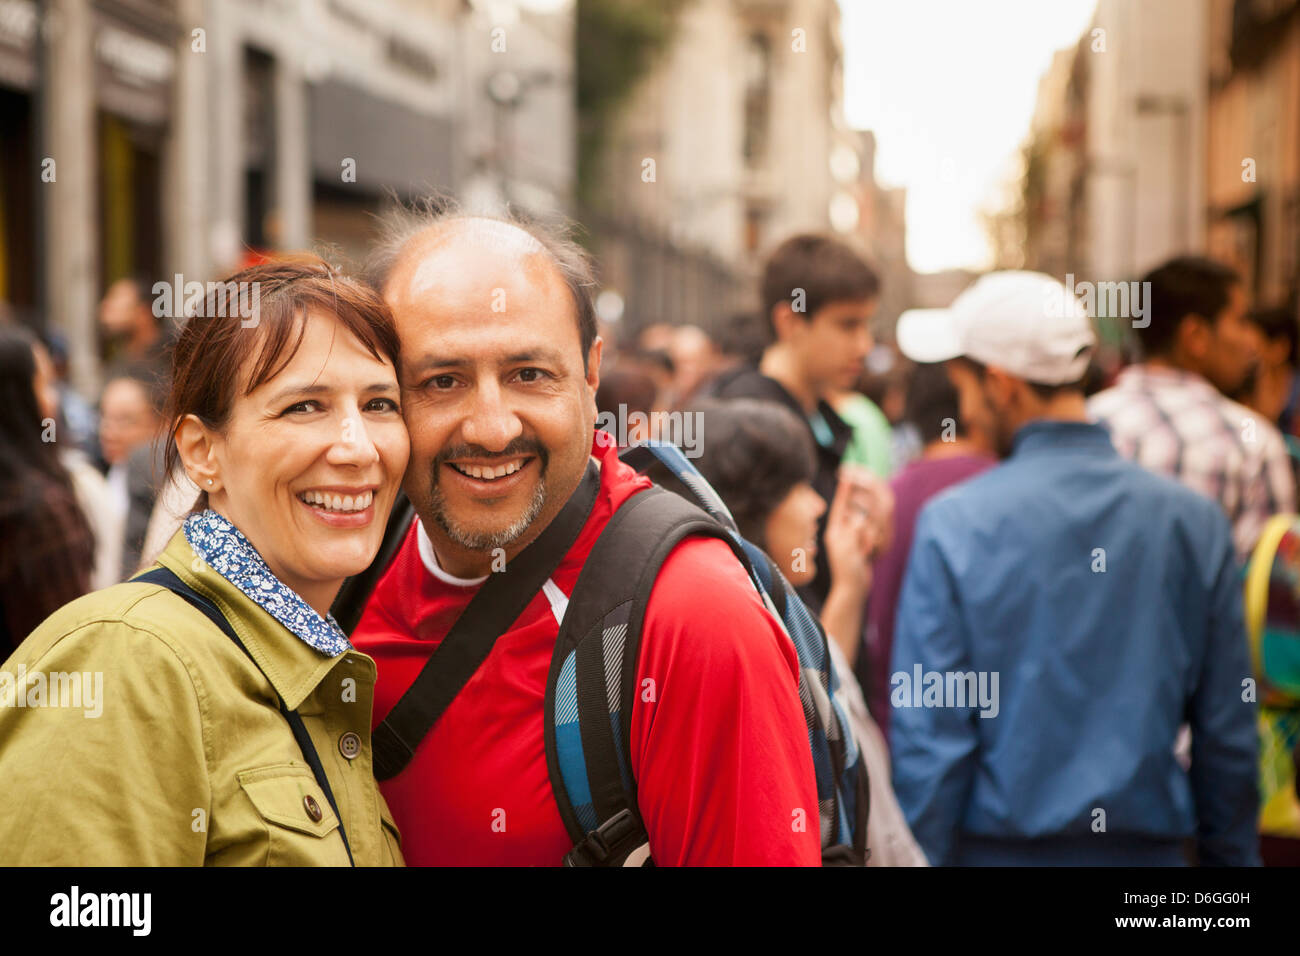 Hispanic couple smiling on city street Stock Photo